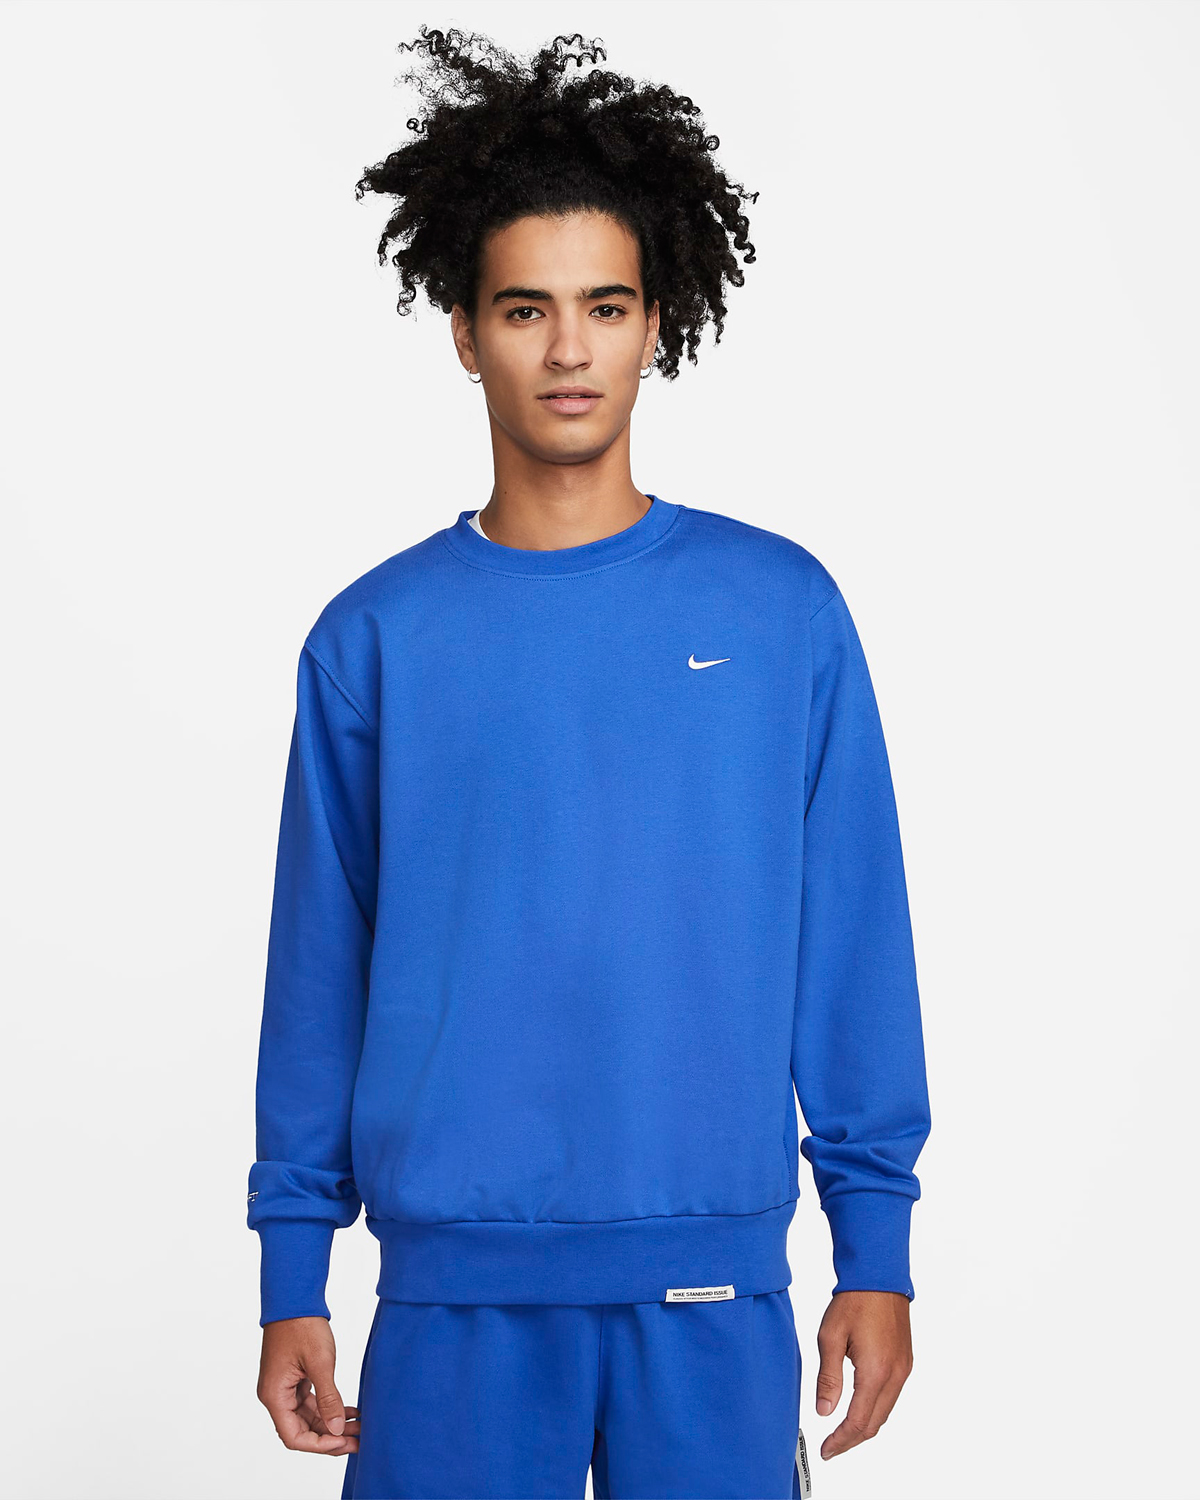 Nike-Standard-Issue-Sweatshirt-Royal-Blue